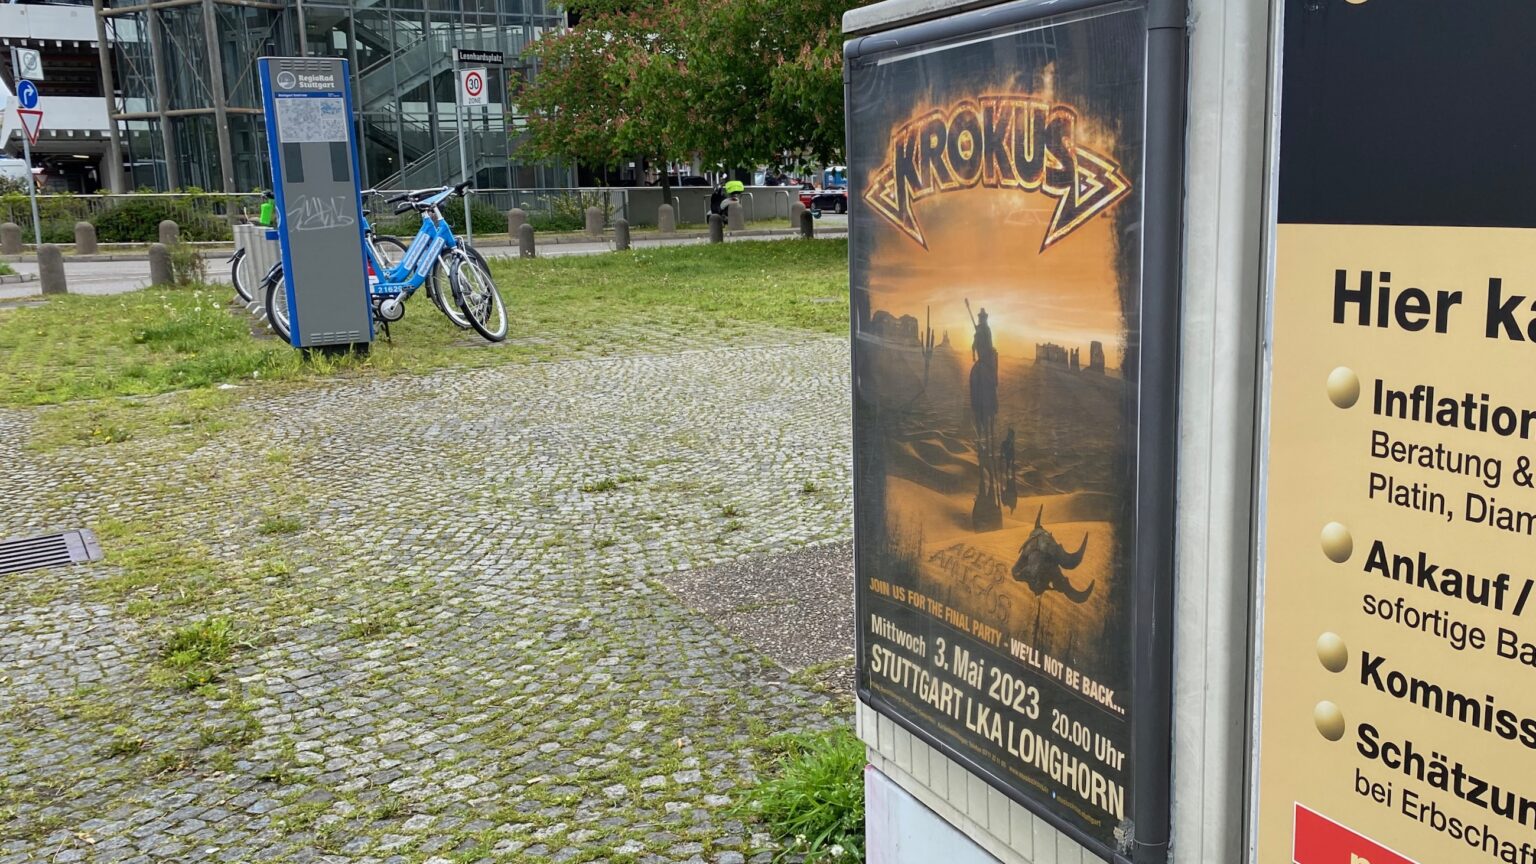 Krokus Werbung Rathaus Stuttgart